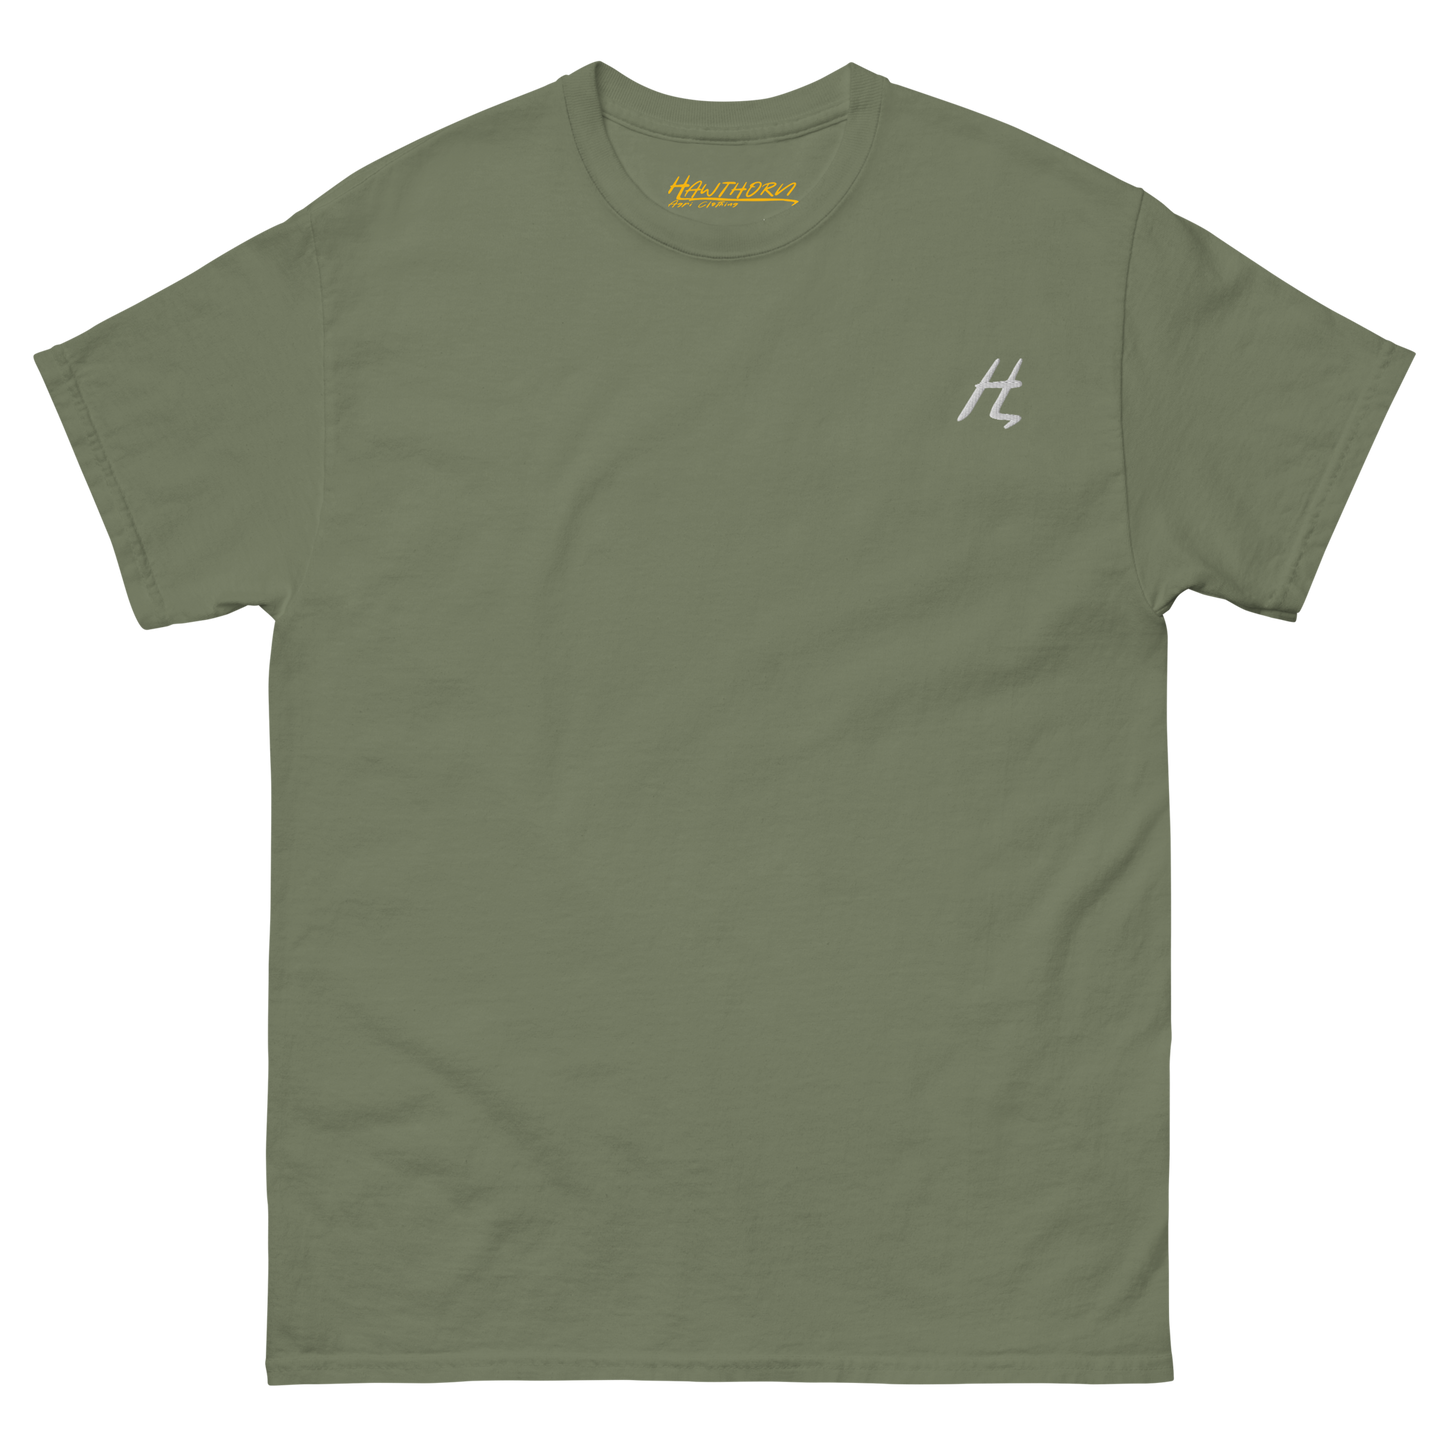 Classic "H" T-shirt